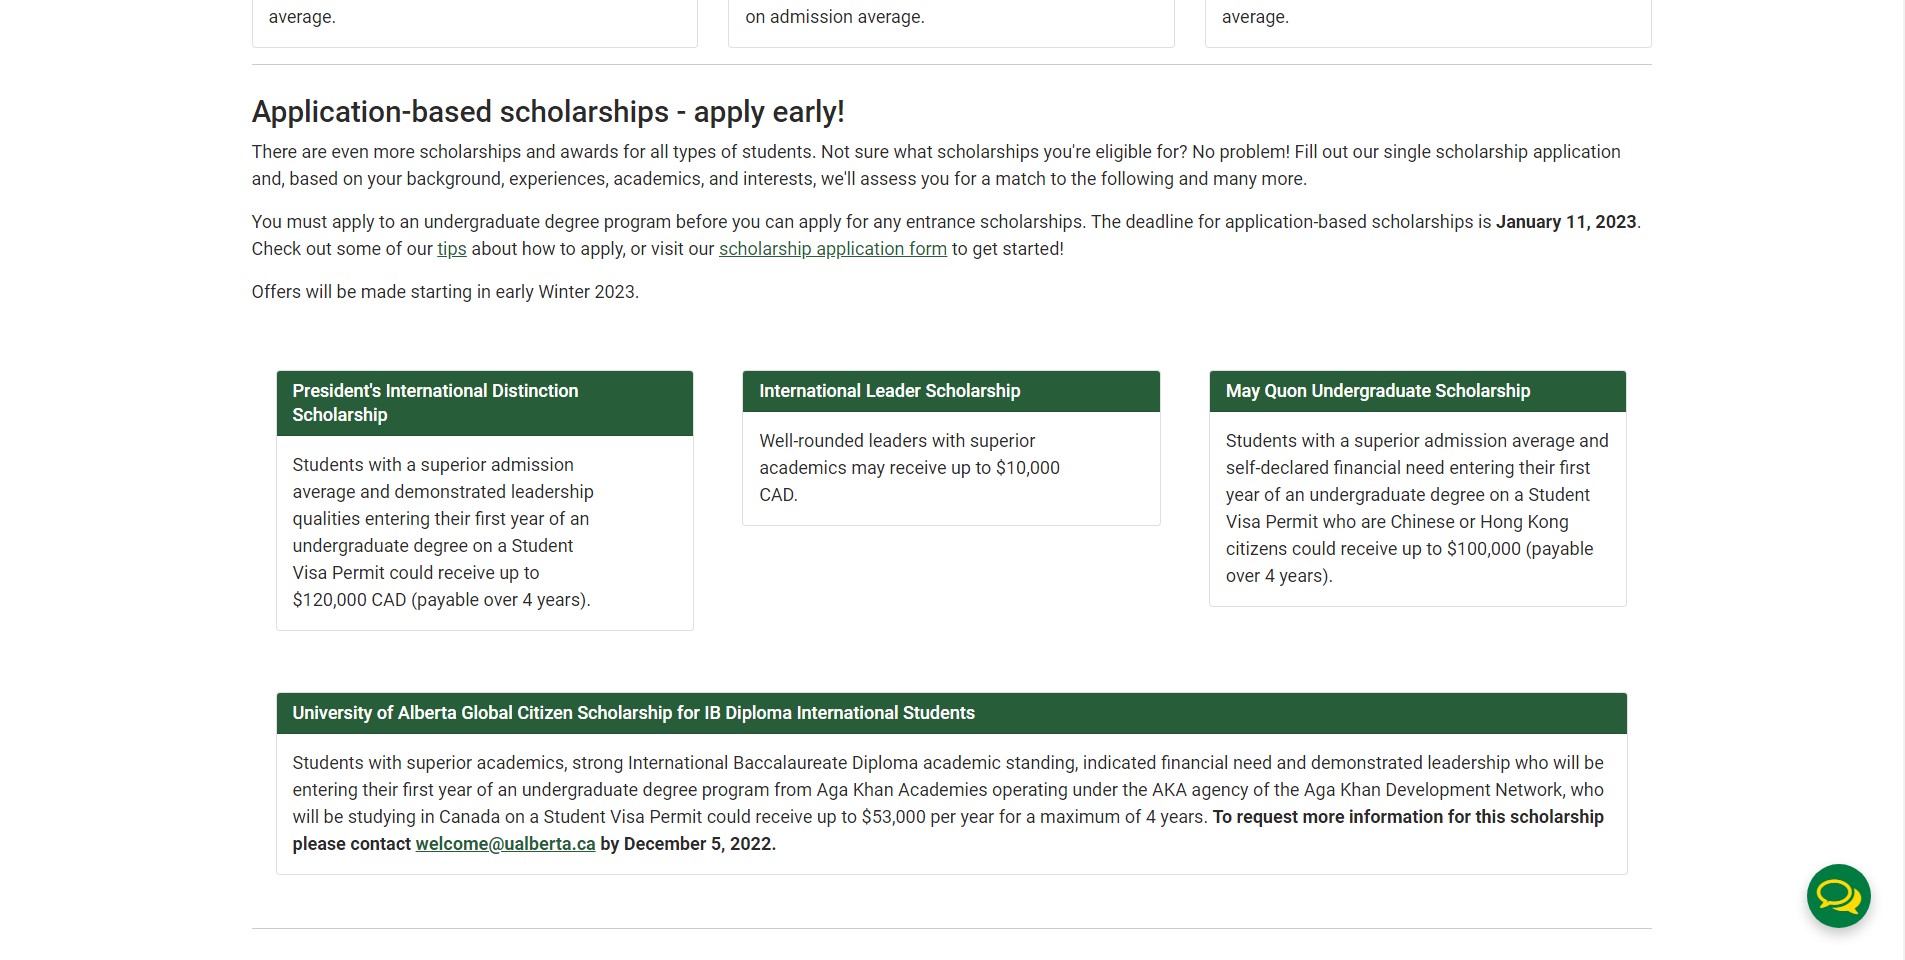 http://www.ishallwin.com/Content/ScholarshipImages/President's International Distinction Scholarship At The University Of Alberta.jpg